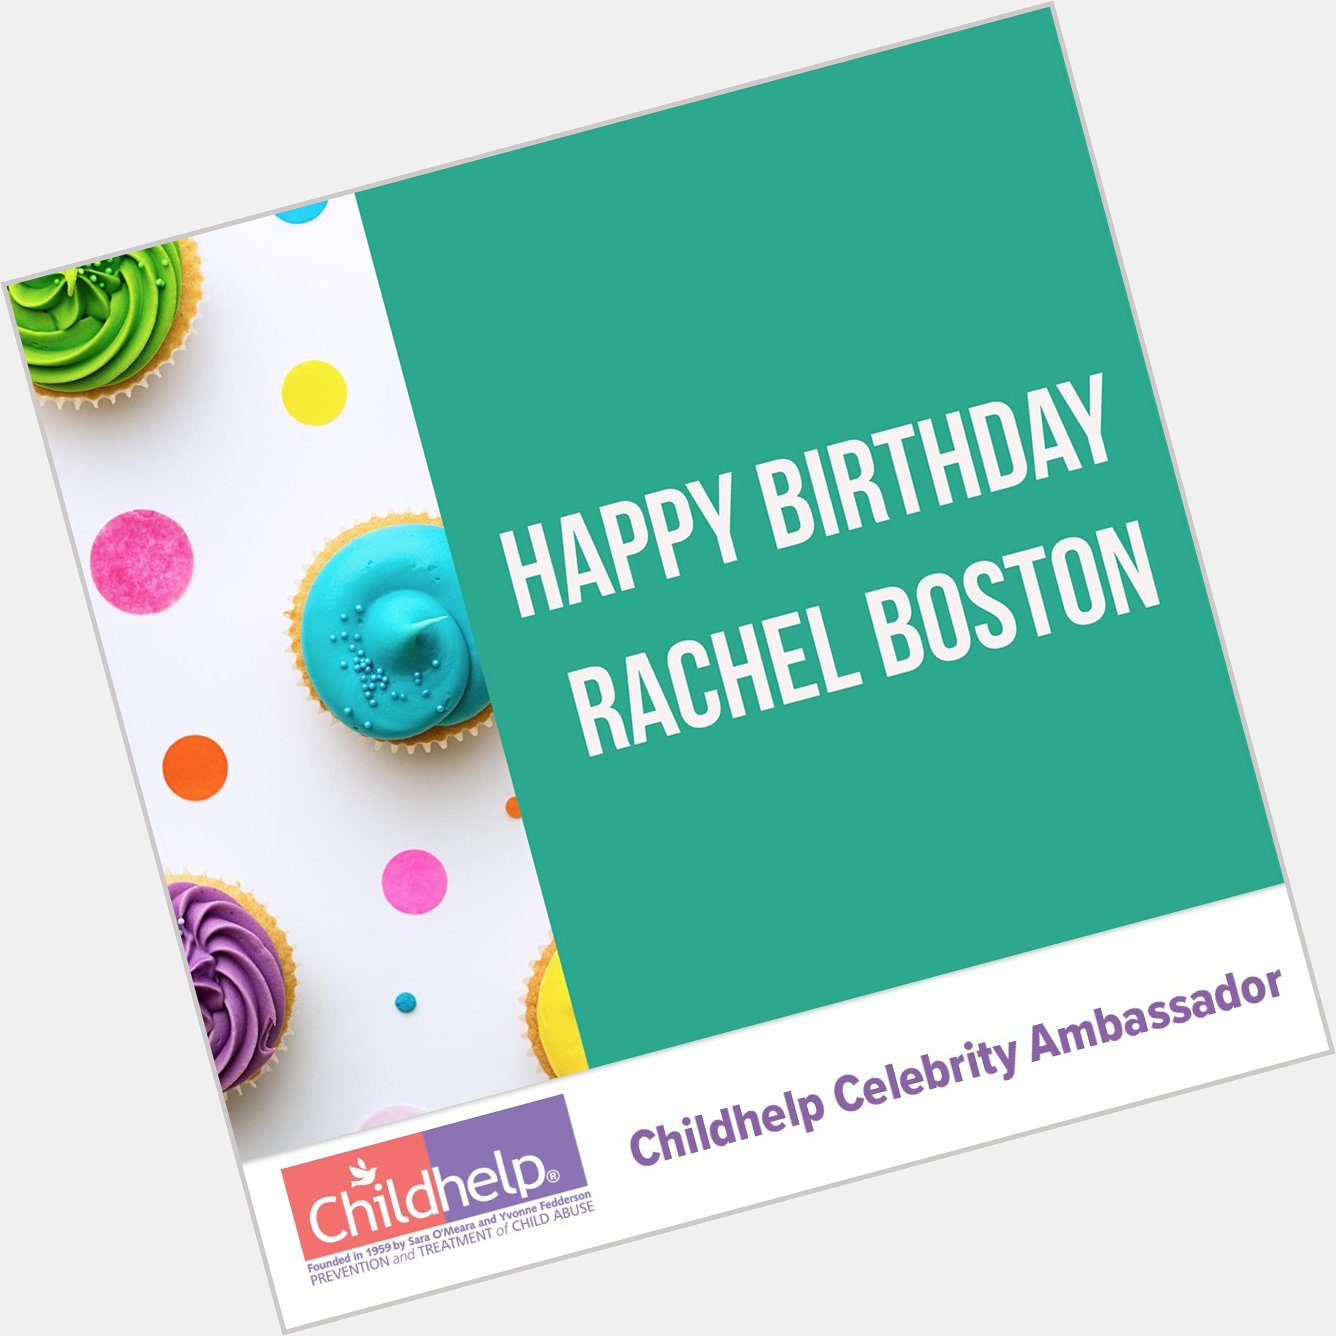 Wishing a very happy birthday to Childhelp Celebrity Ambassador Rachel Boston! 